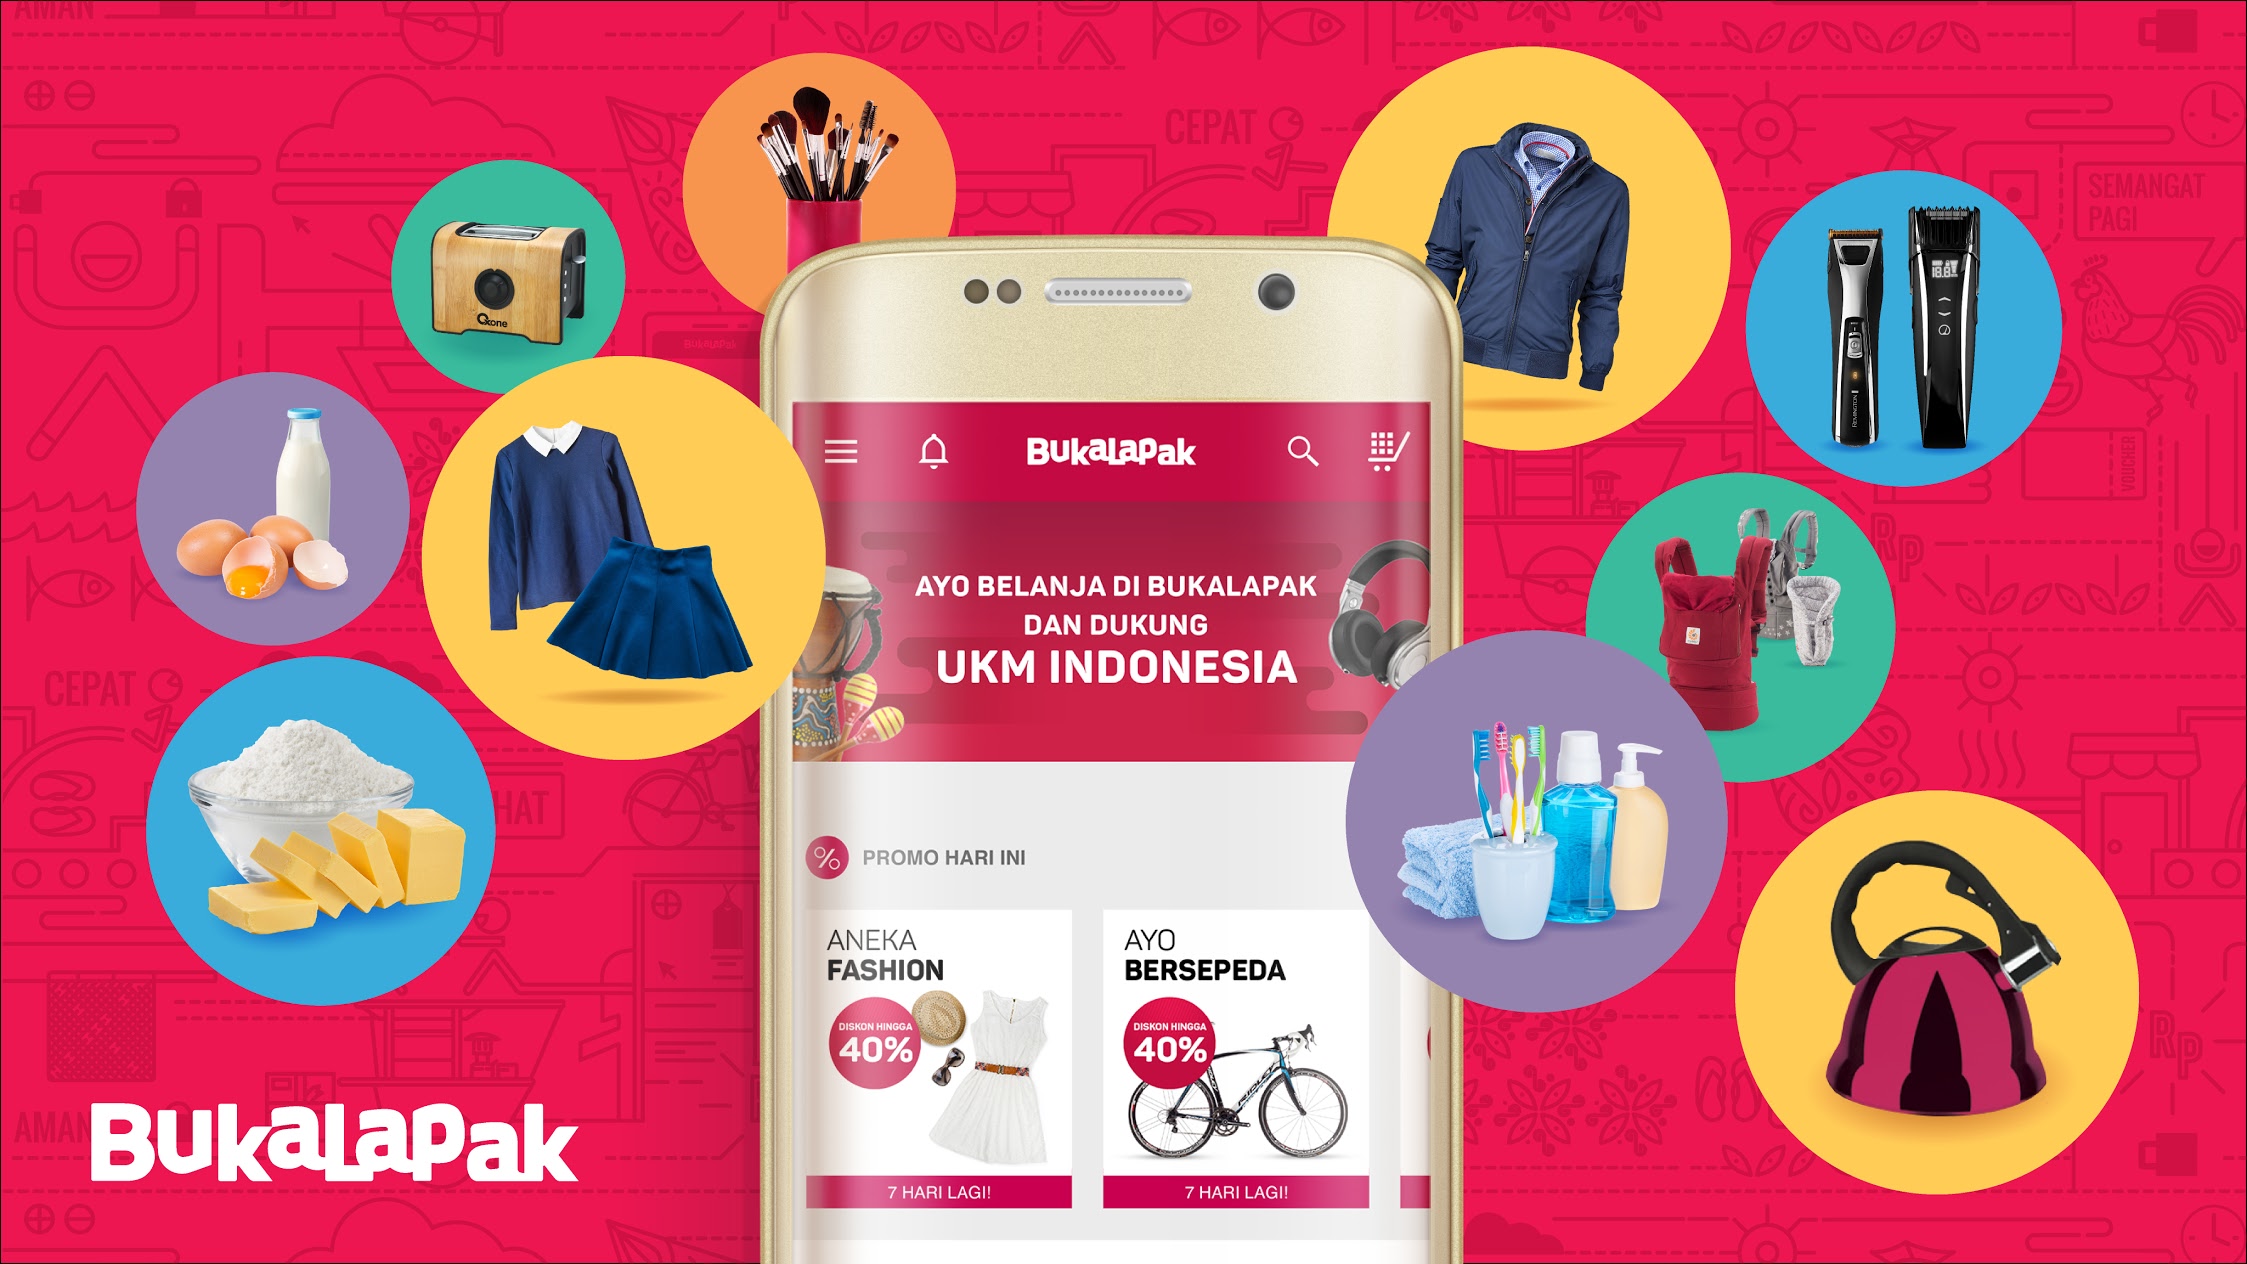 Bukalapak launches new fintech subsidiary Buka Investasi Bersama